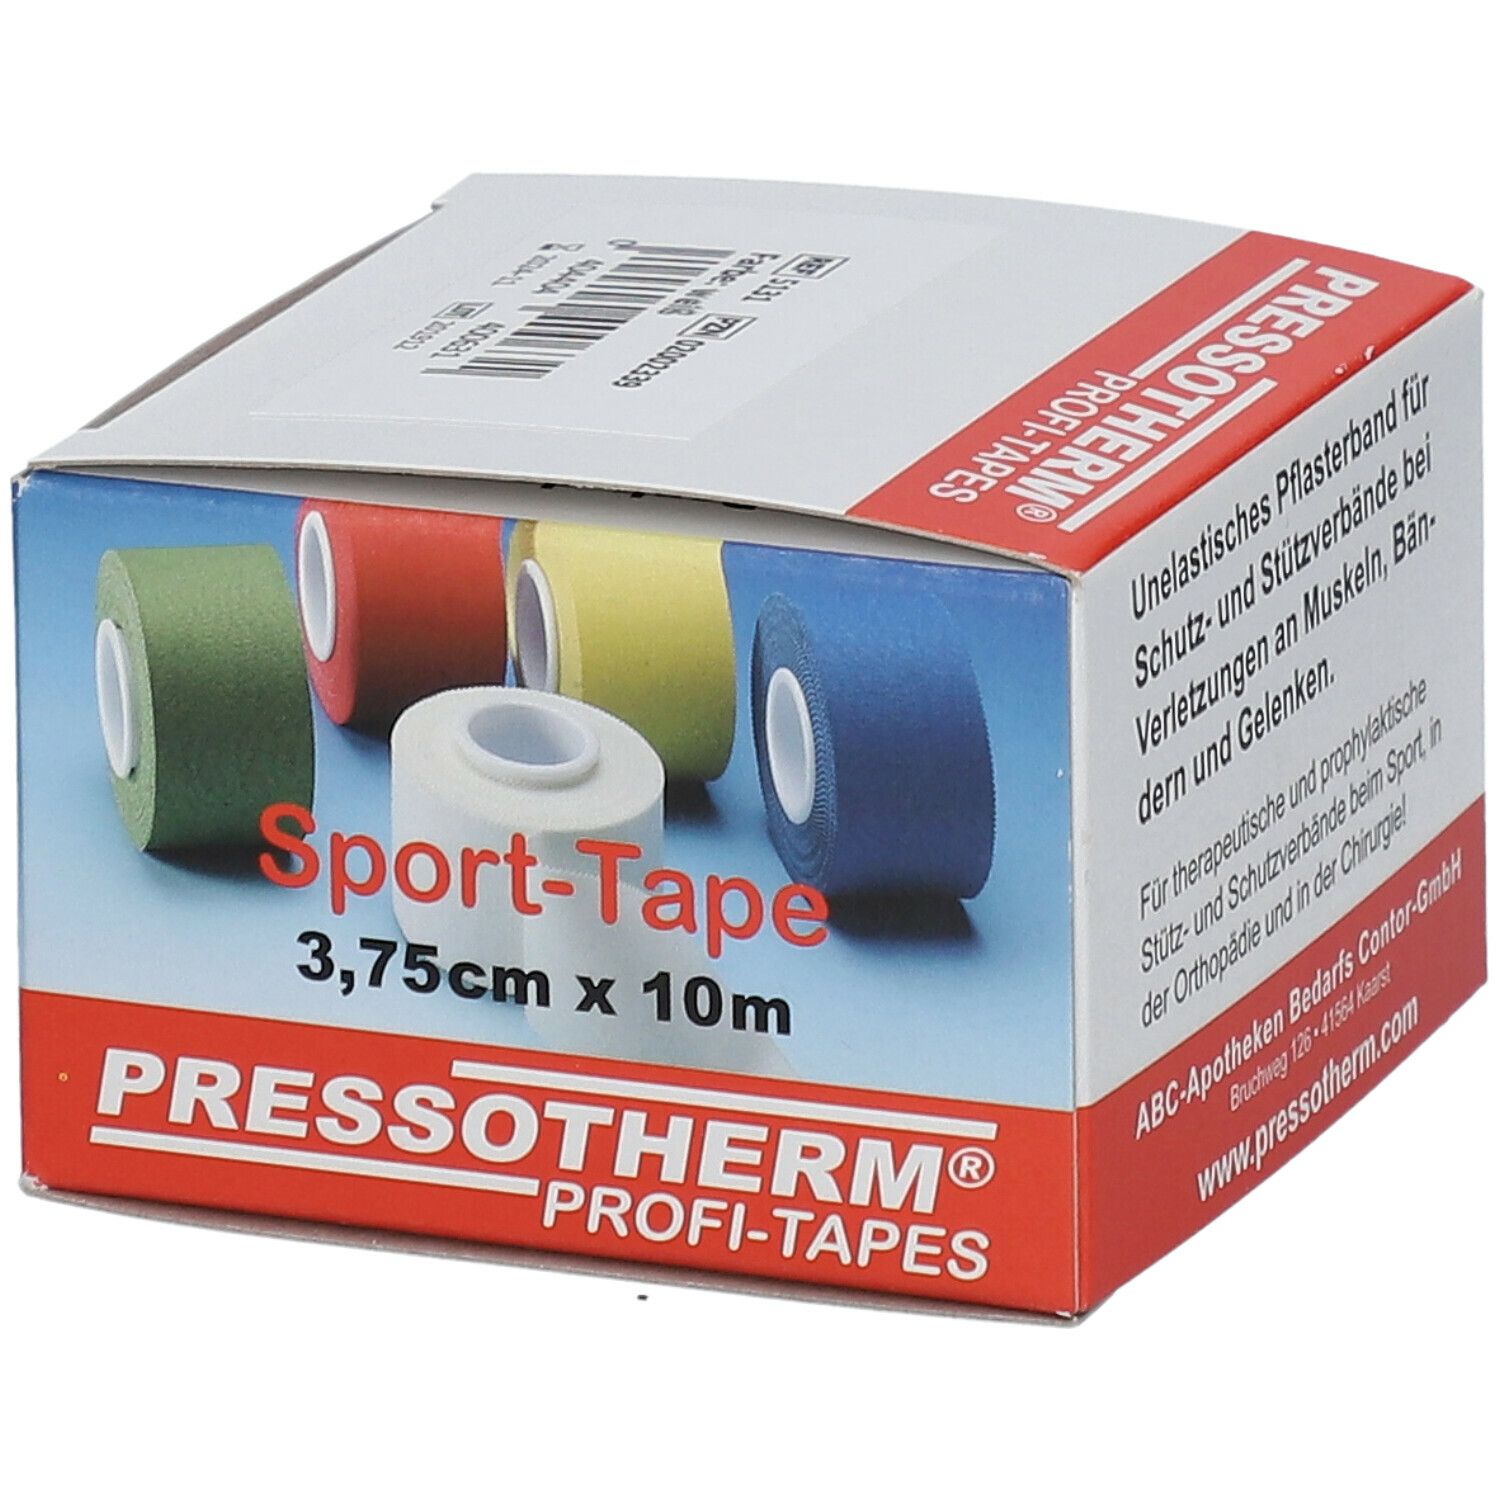 Pressotherm® Sport-Tape 3,8 cm x 10 m weiß